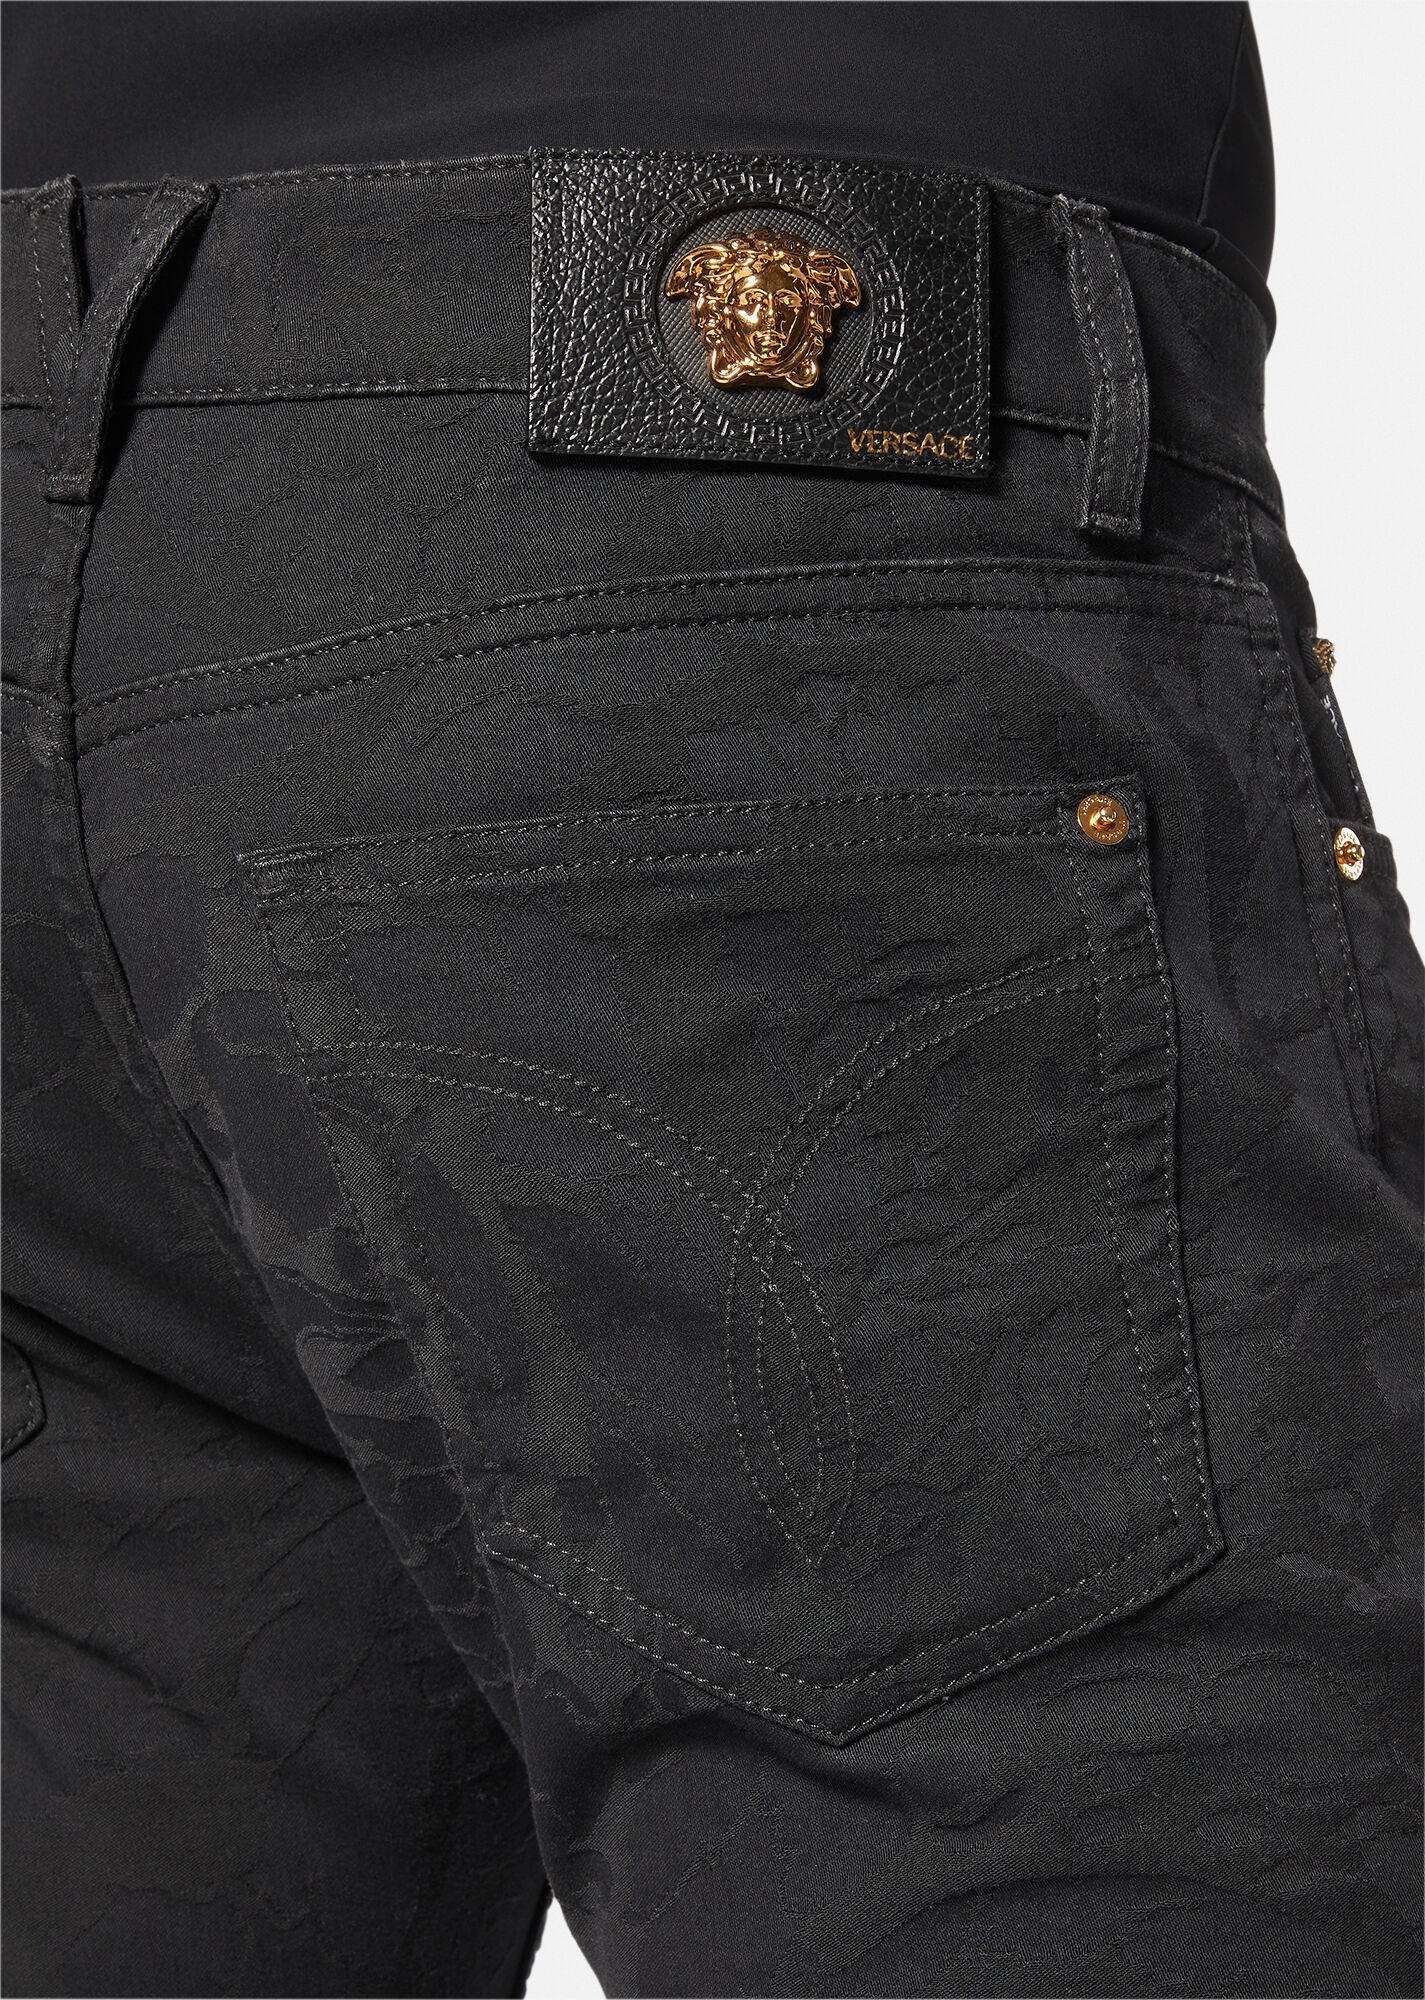 Barocco Jacquard Slim-Fit Jeans - 5